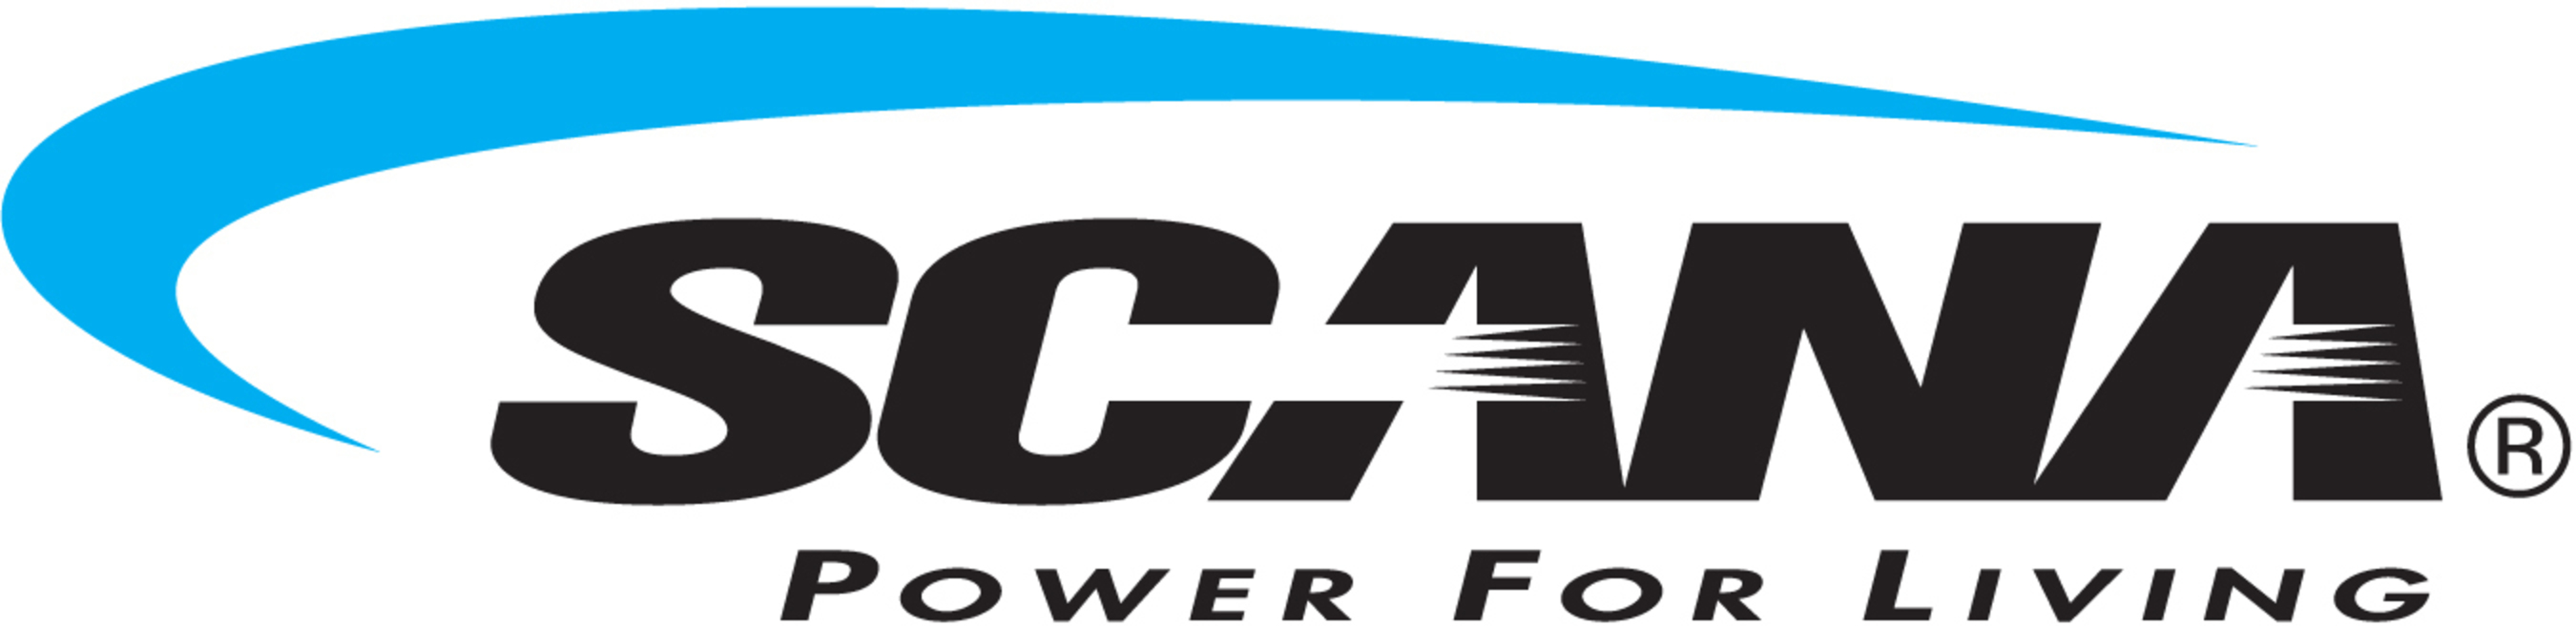 SCANA Corporation logo.